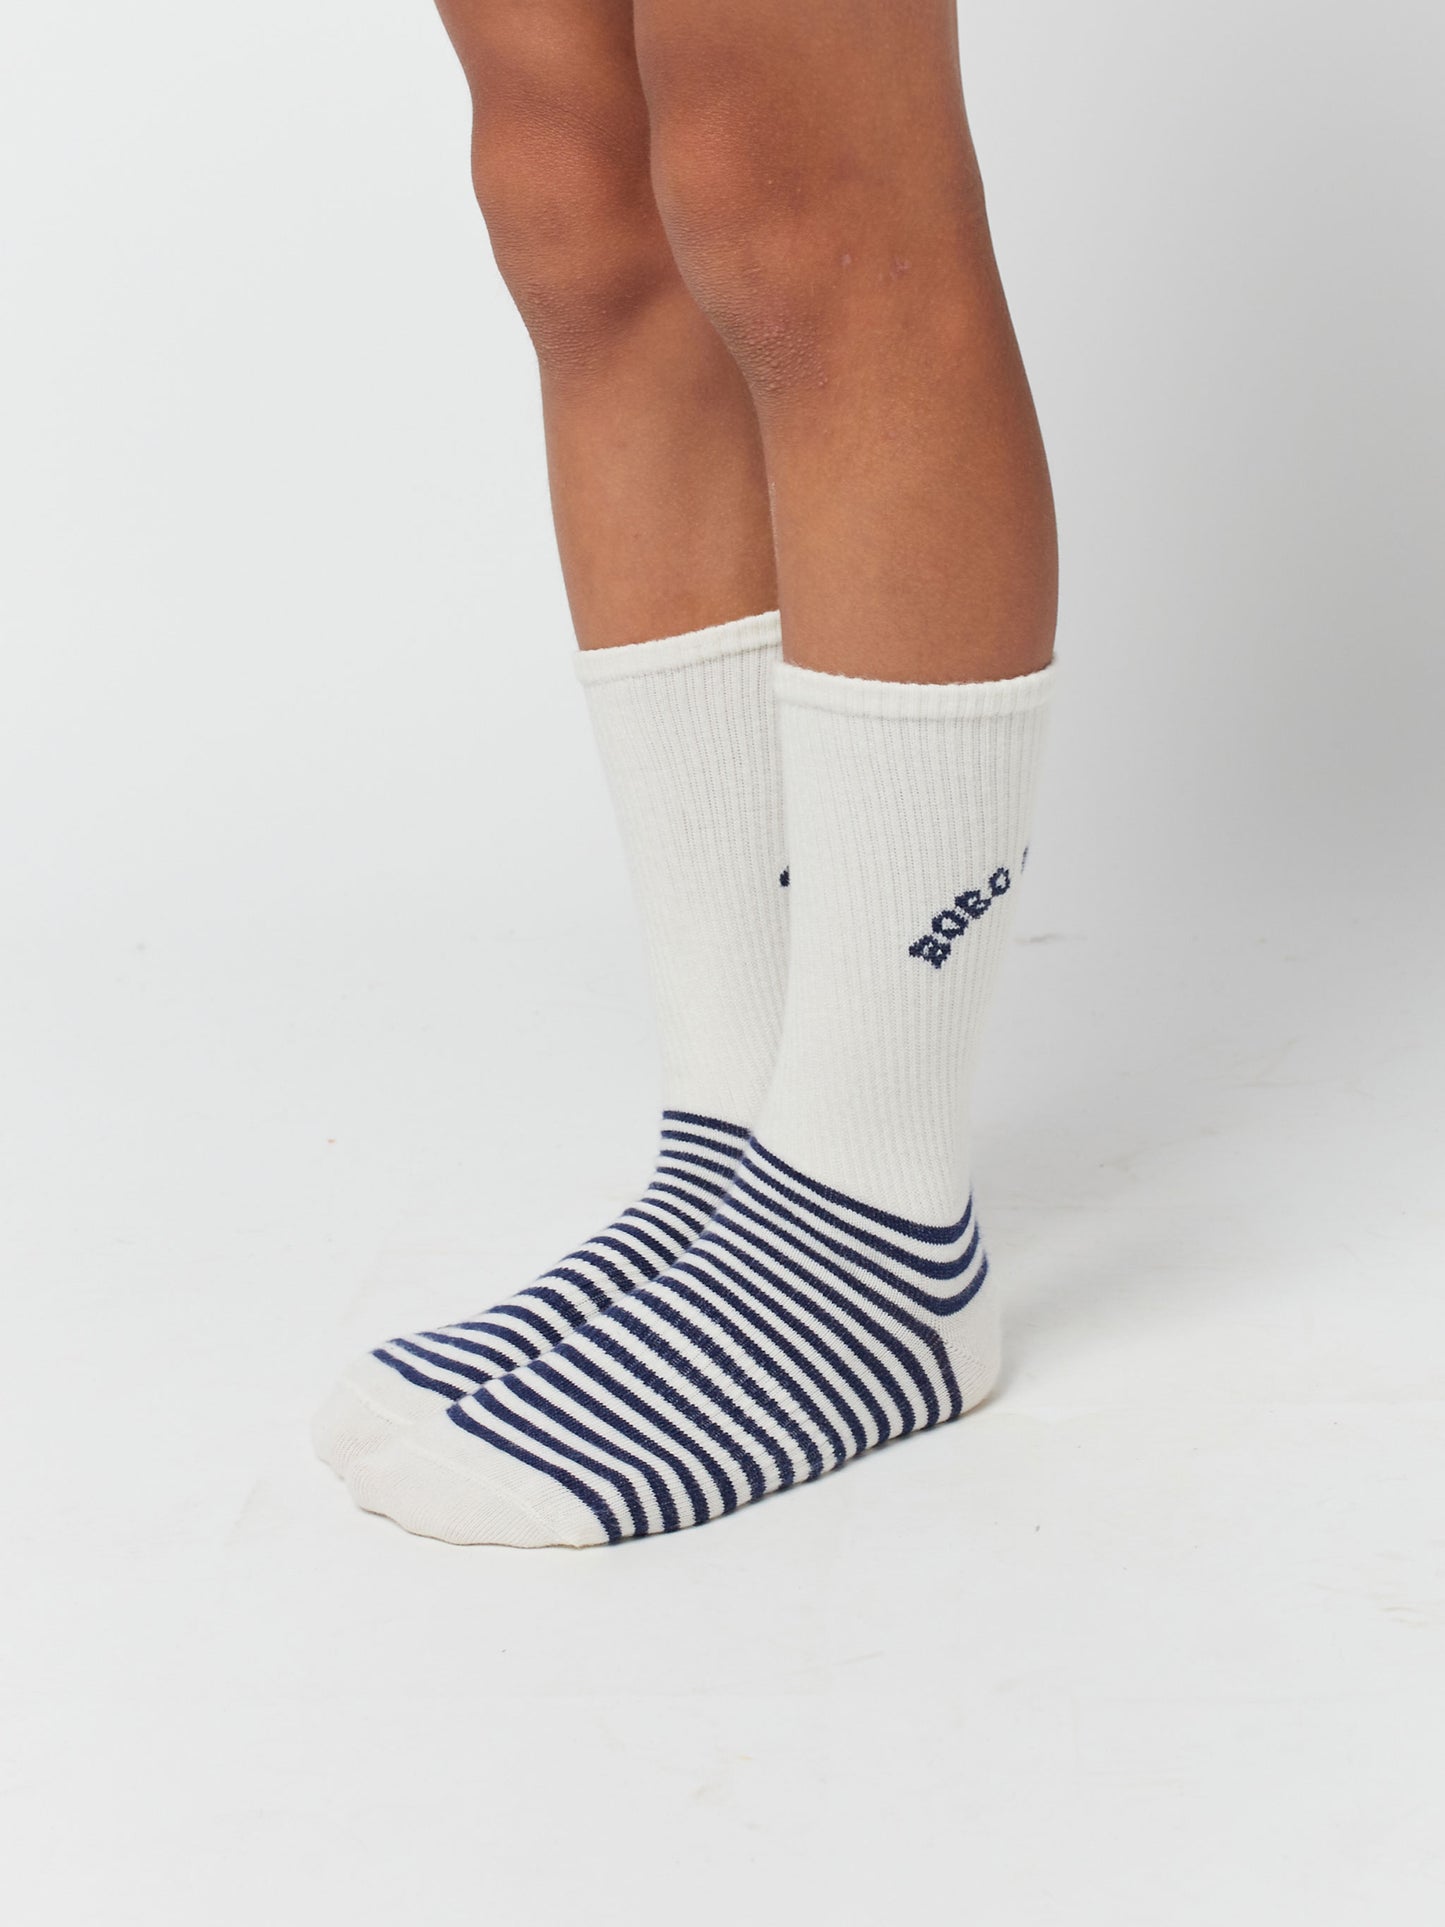 Blue Stripes socks